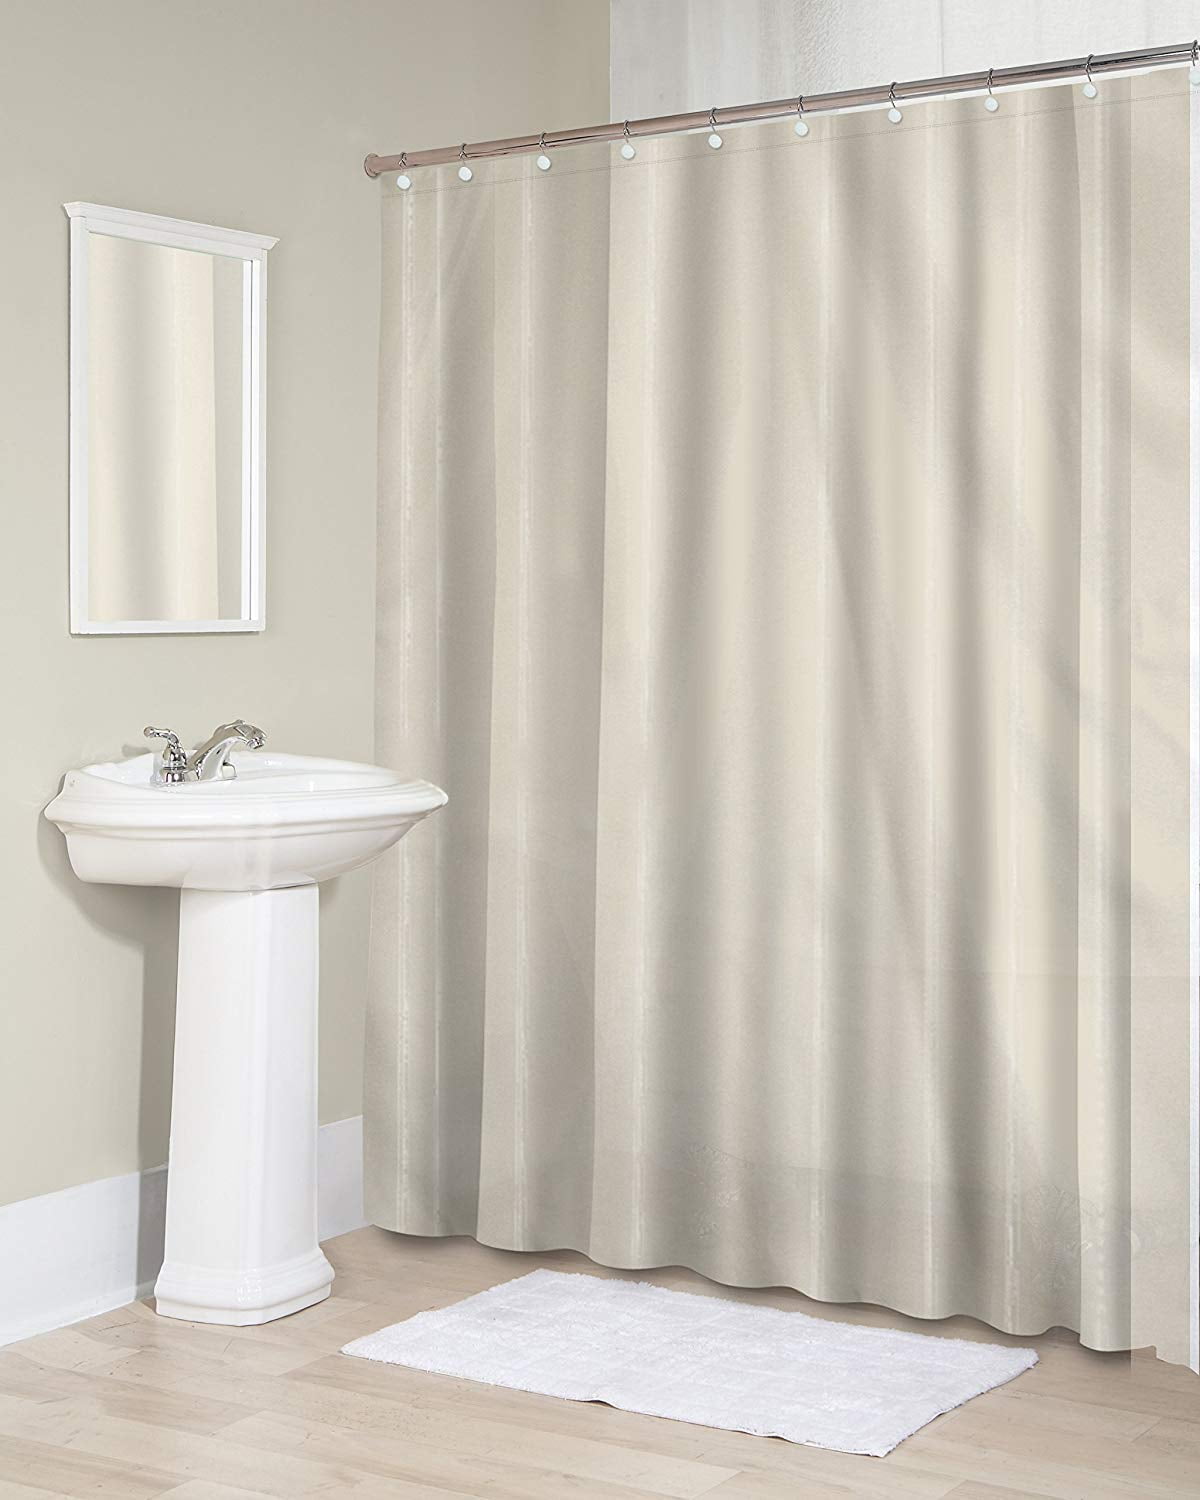 Splash Home Sheer Fabric Microfiber, Bed Bath Beyond Shower Curtains Fabric